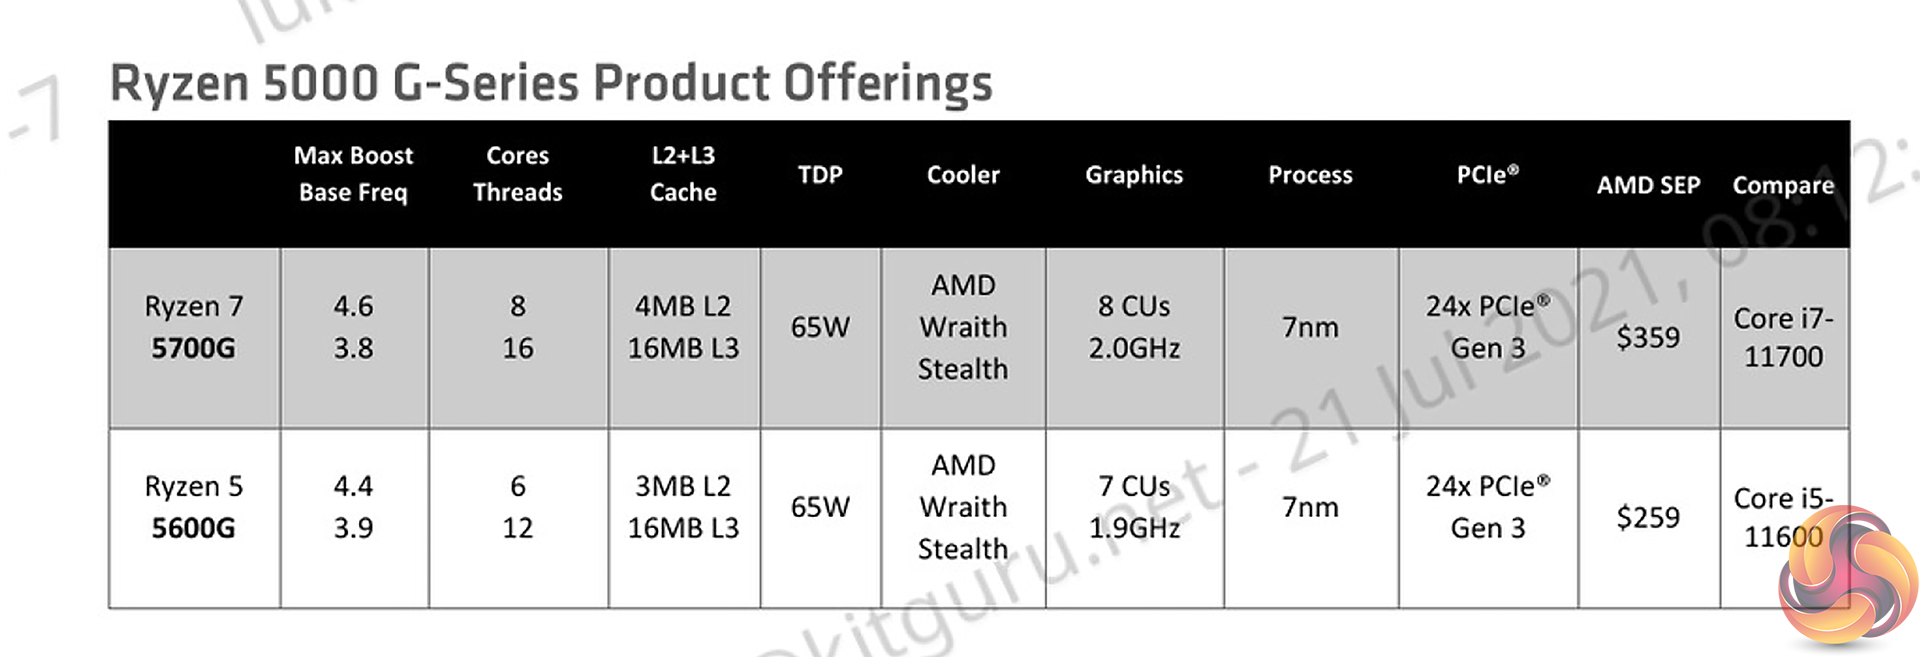 Amd ryzen 5 5600x цены. Процессор AMD Ryzen 7 5700g 3,8/4,6ghz, 8с/16т, 16mb l3, ddr4- 3200, GPU Radeon Vega 8 Graphics, TDP. Ryzen 5000 Series что значит.